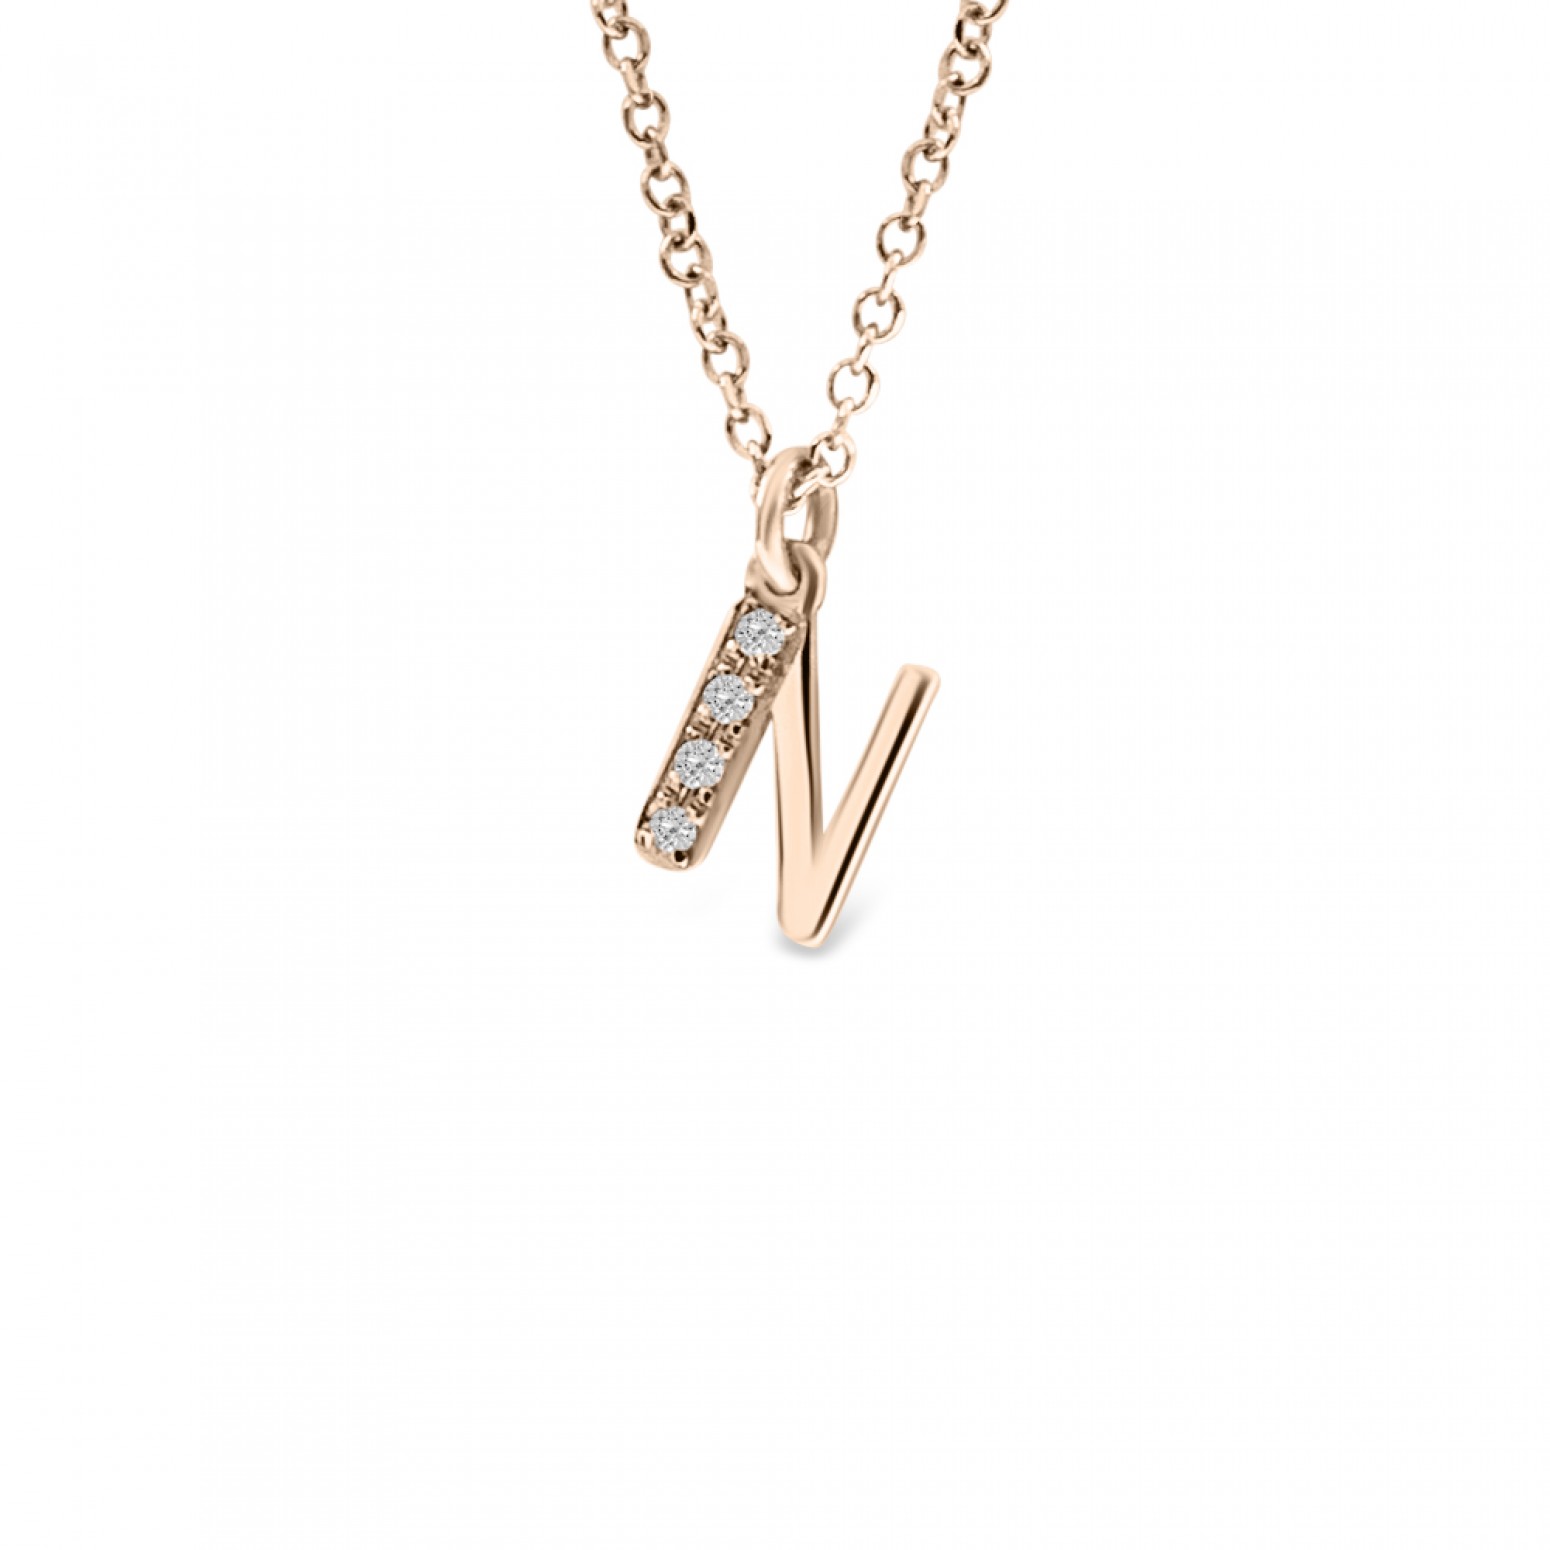 Monogram necklace N, Κ14 pink gold with diamonds 0.02ct, VS2, H ko4625 NECKLACES Κοσμηματα - chrilia.gr